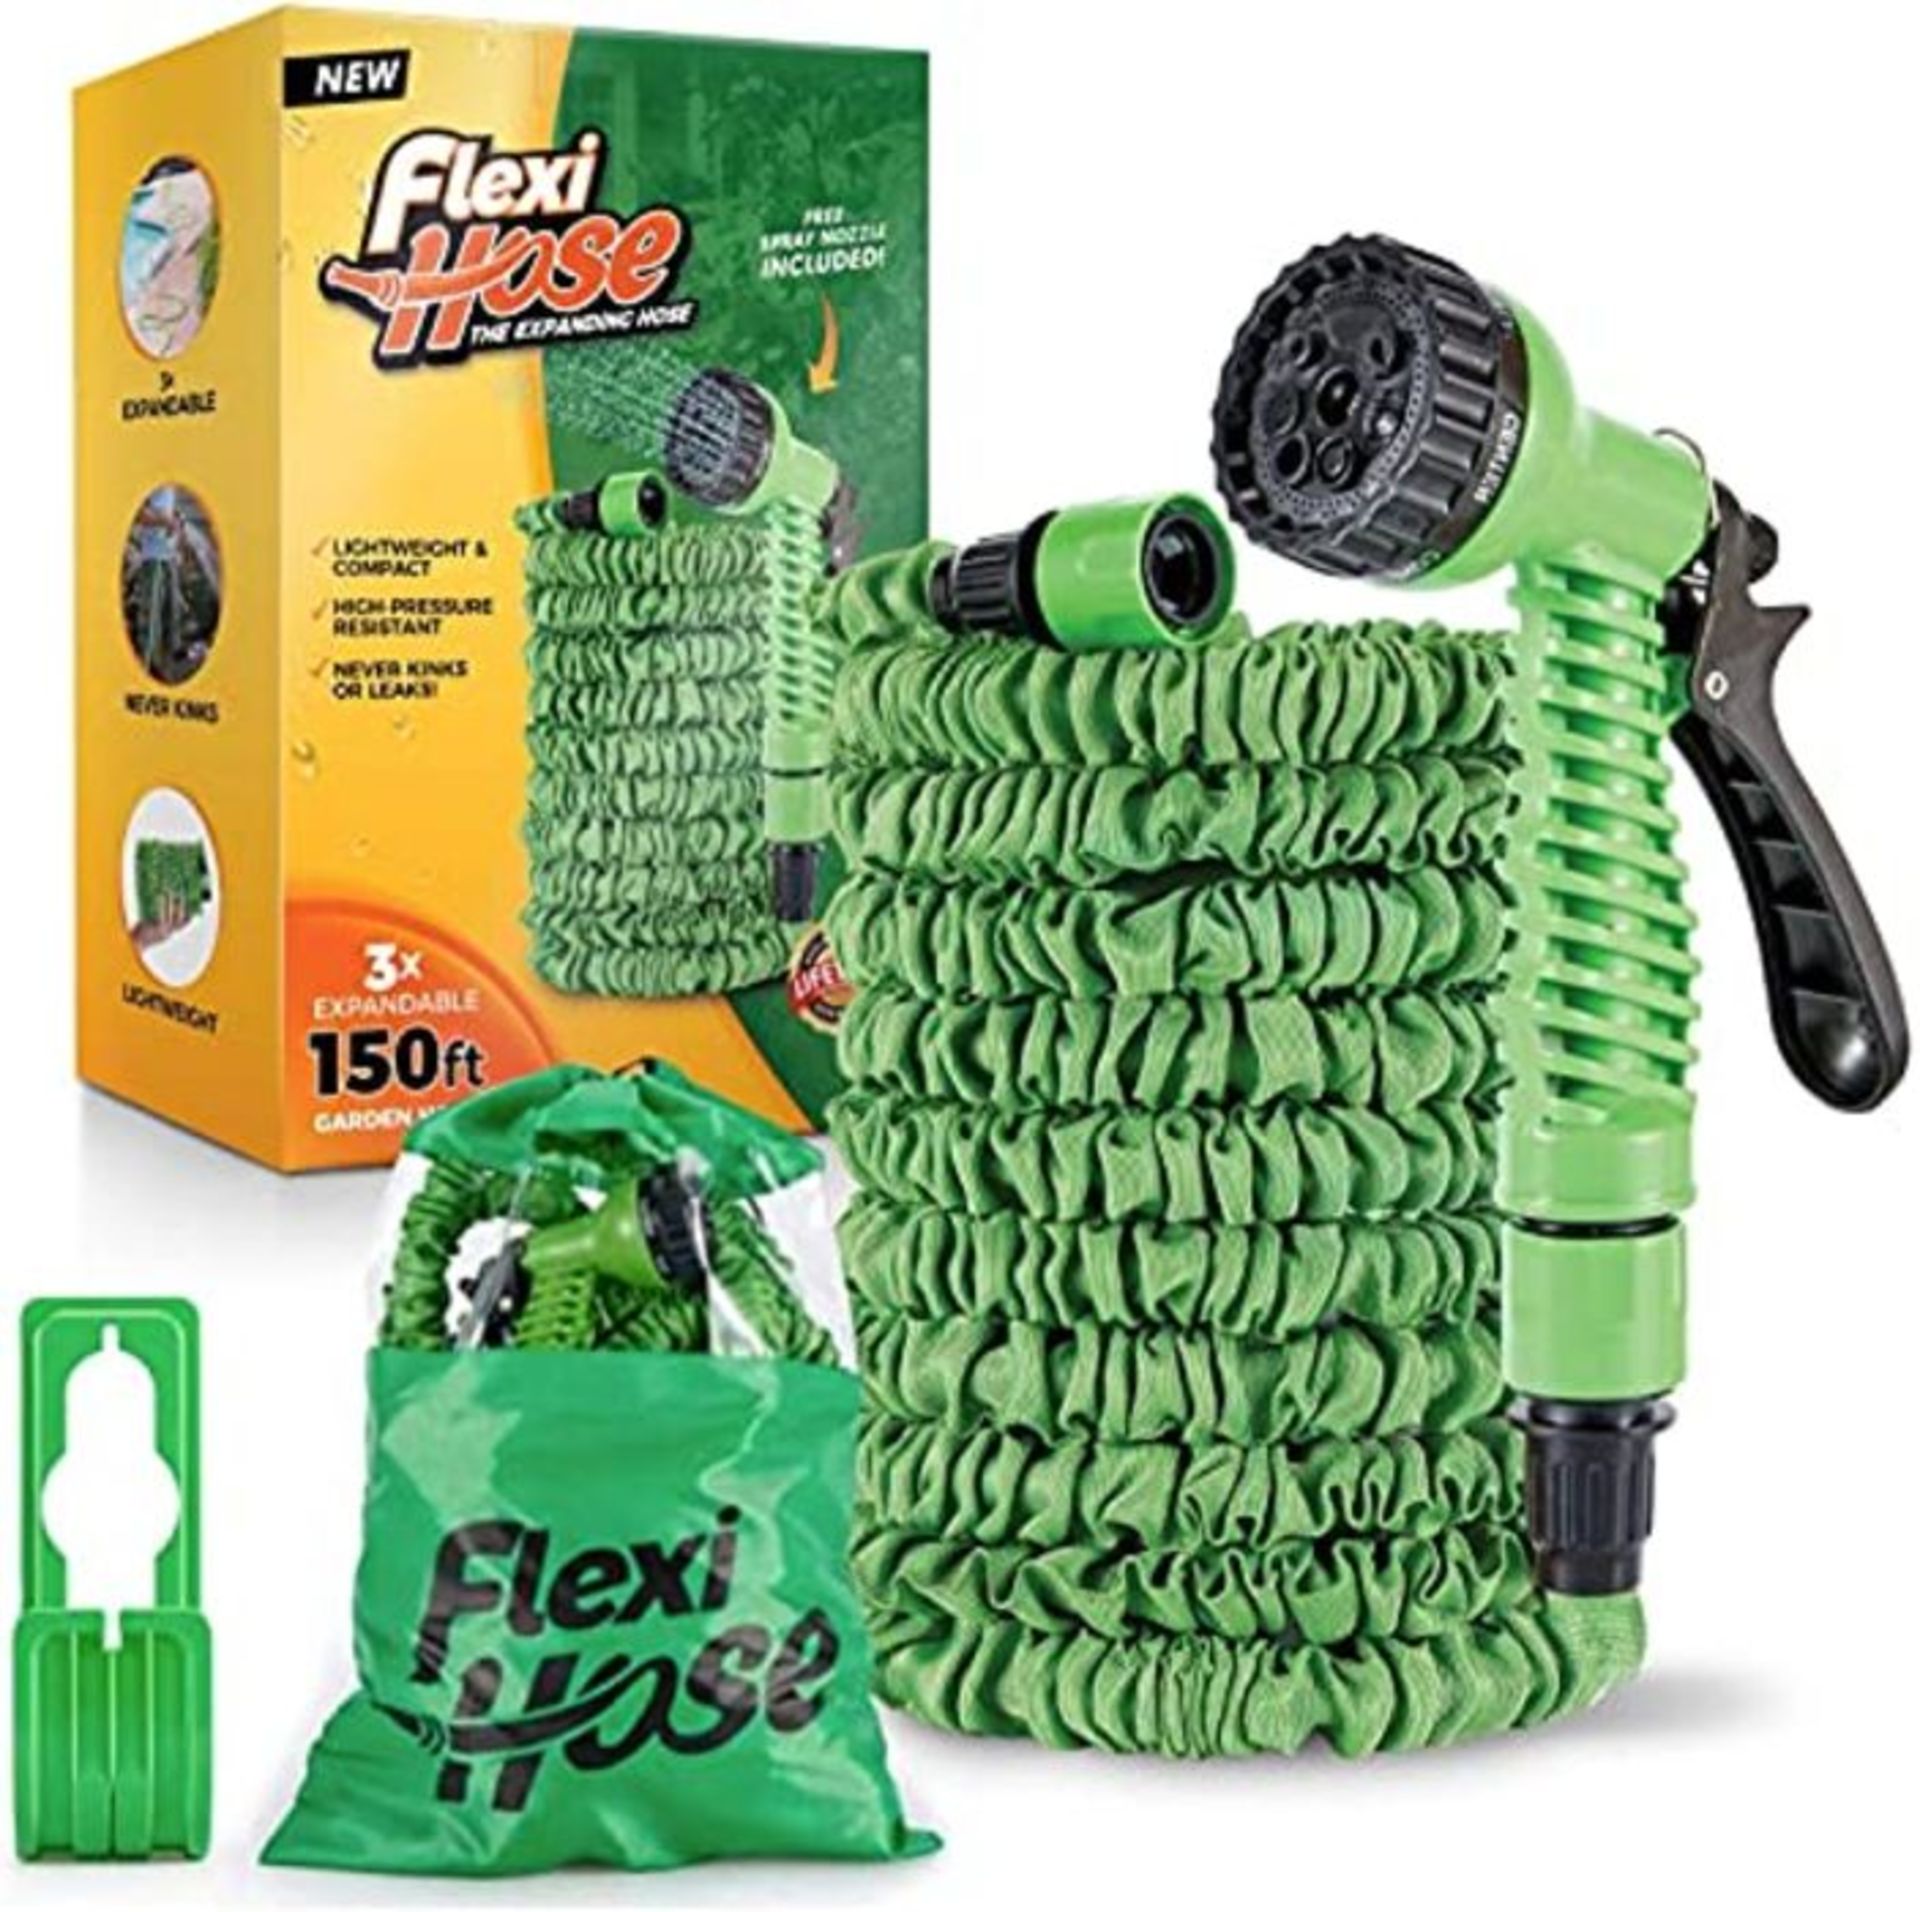 Flexi Hose 150 Foot Expandable Garden Hose with 7 Function Spray Nozzle - Durable Bras